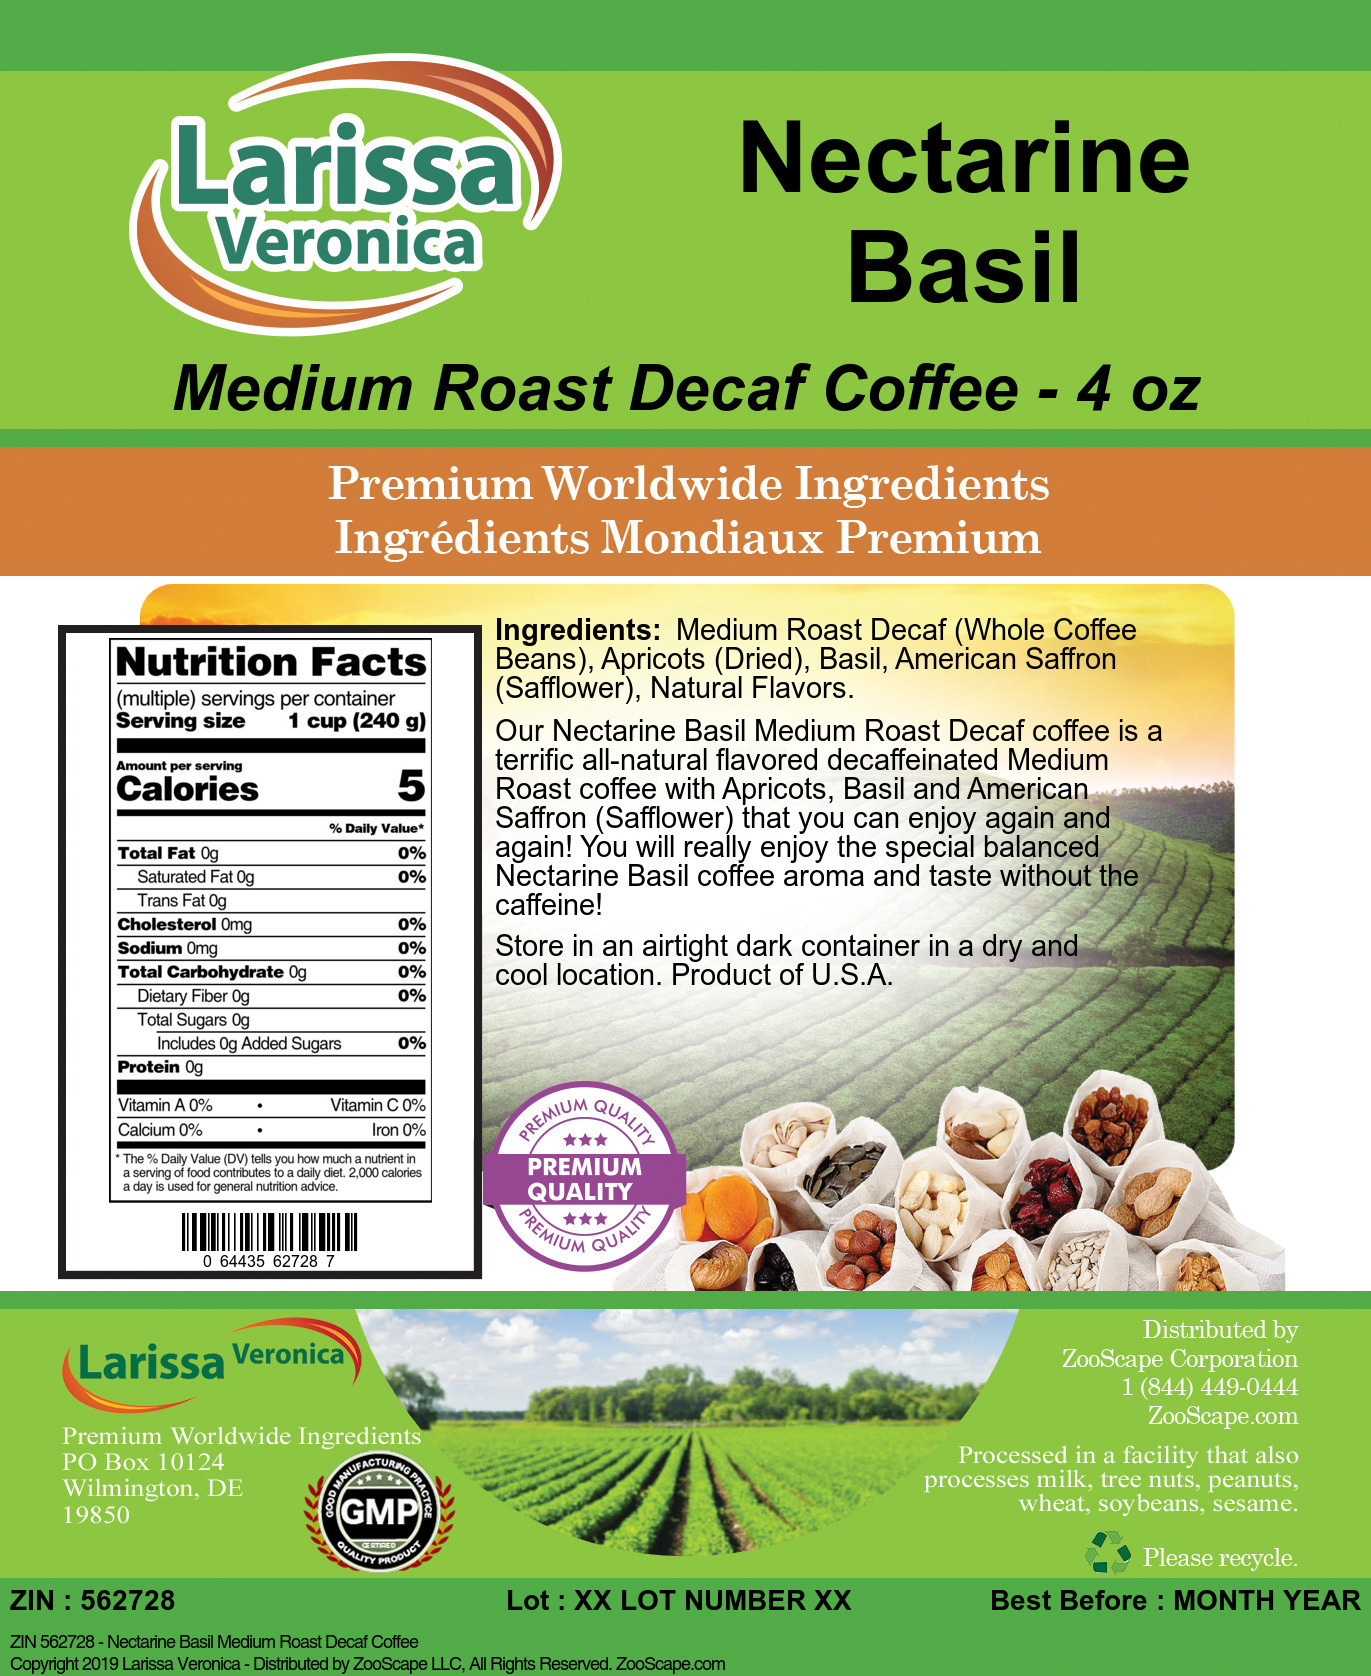 Nectarine Basil Medium Roast Decaf Coffee - Label